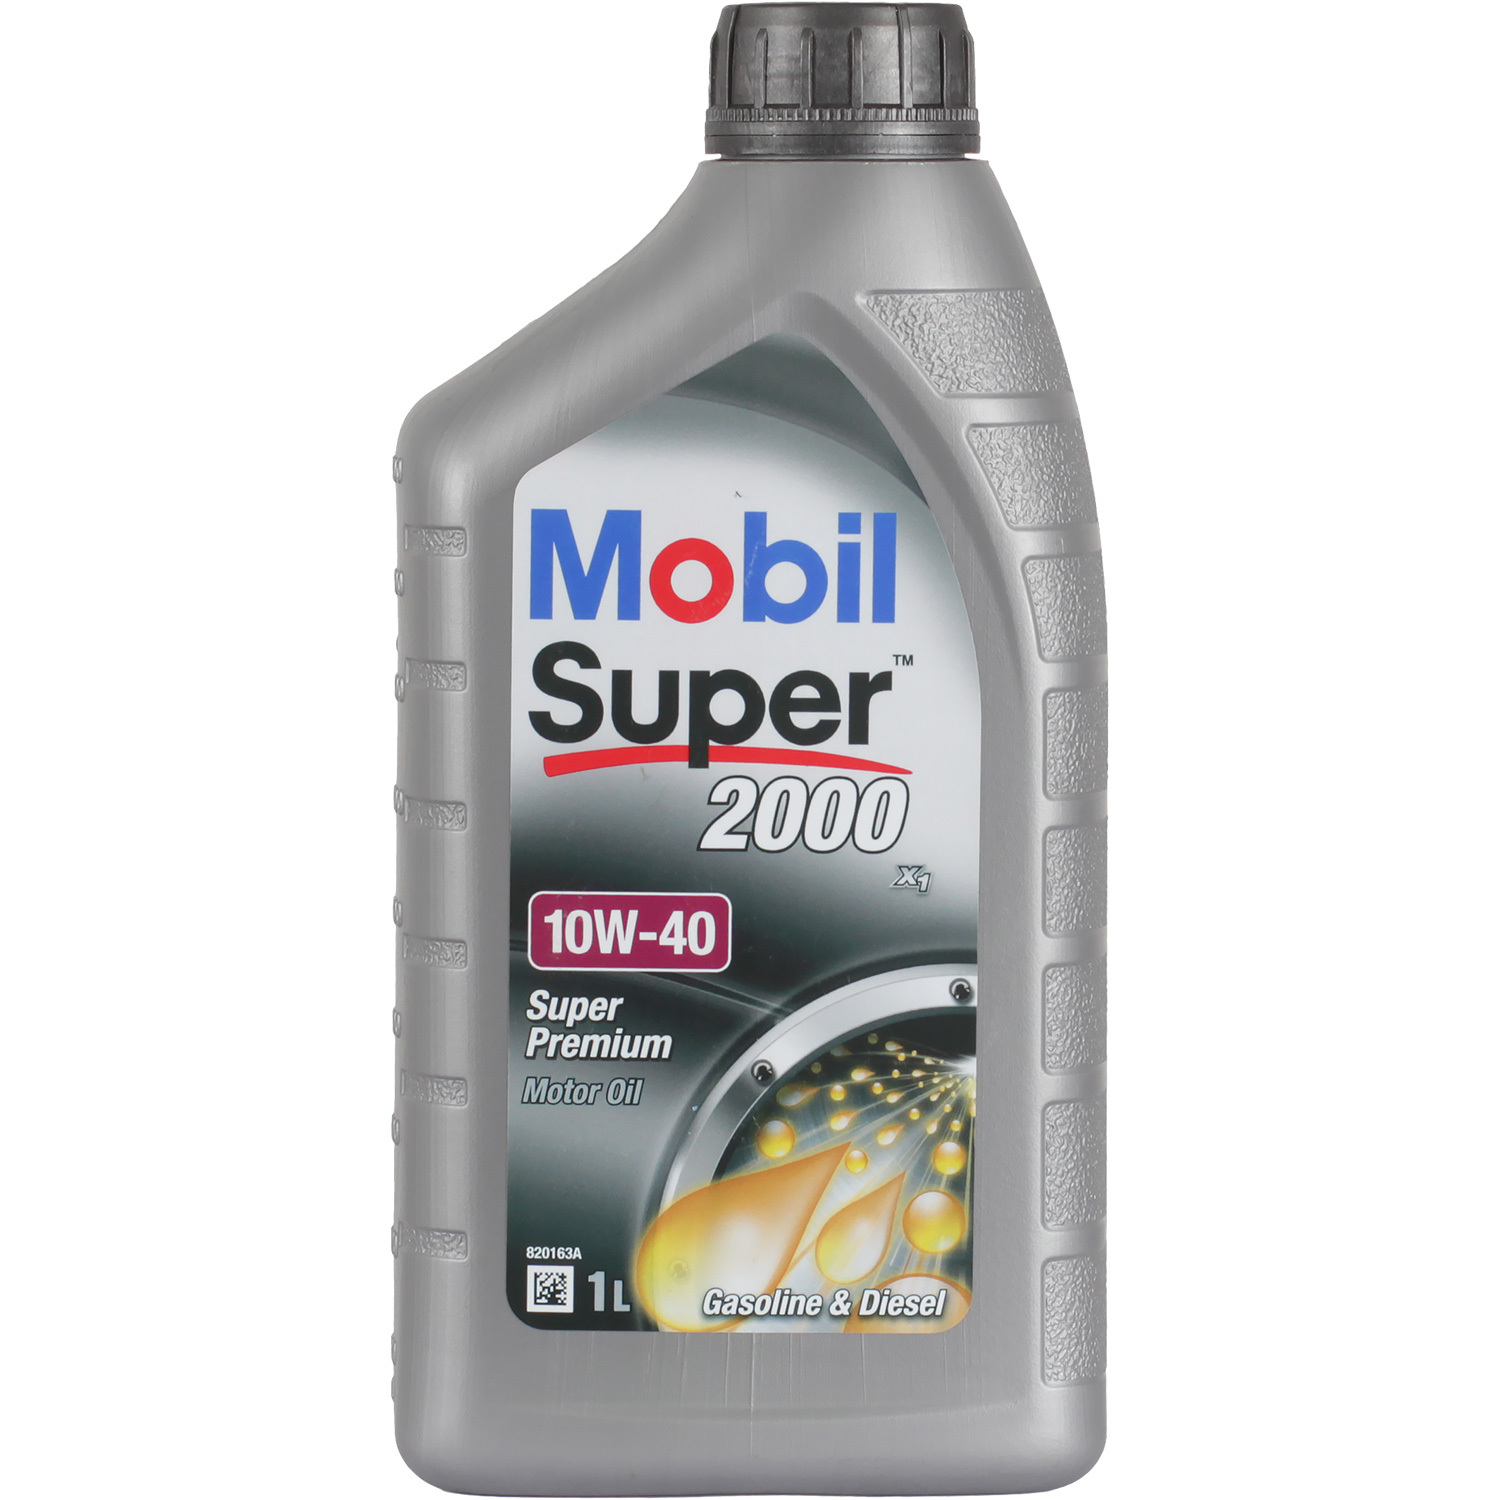 Mobil Моторное масло Mobil Super 2000 X1 10W-40, 1 л масло моторное mobil super 2000 x1 10w 40 1 л